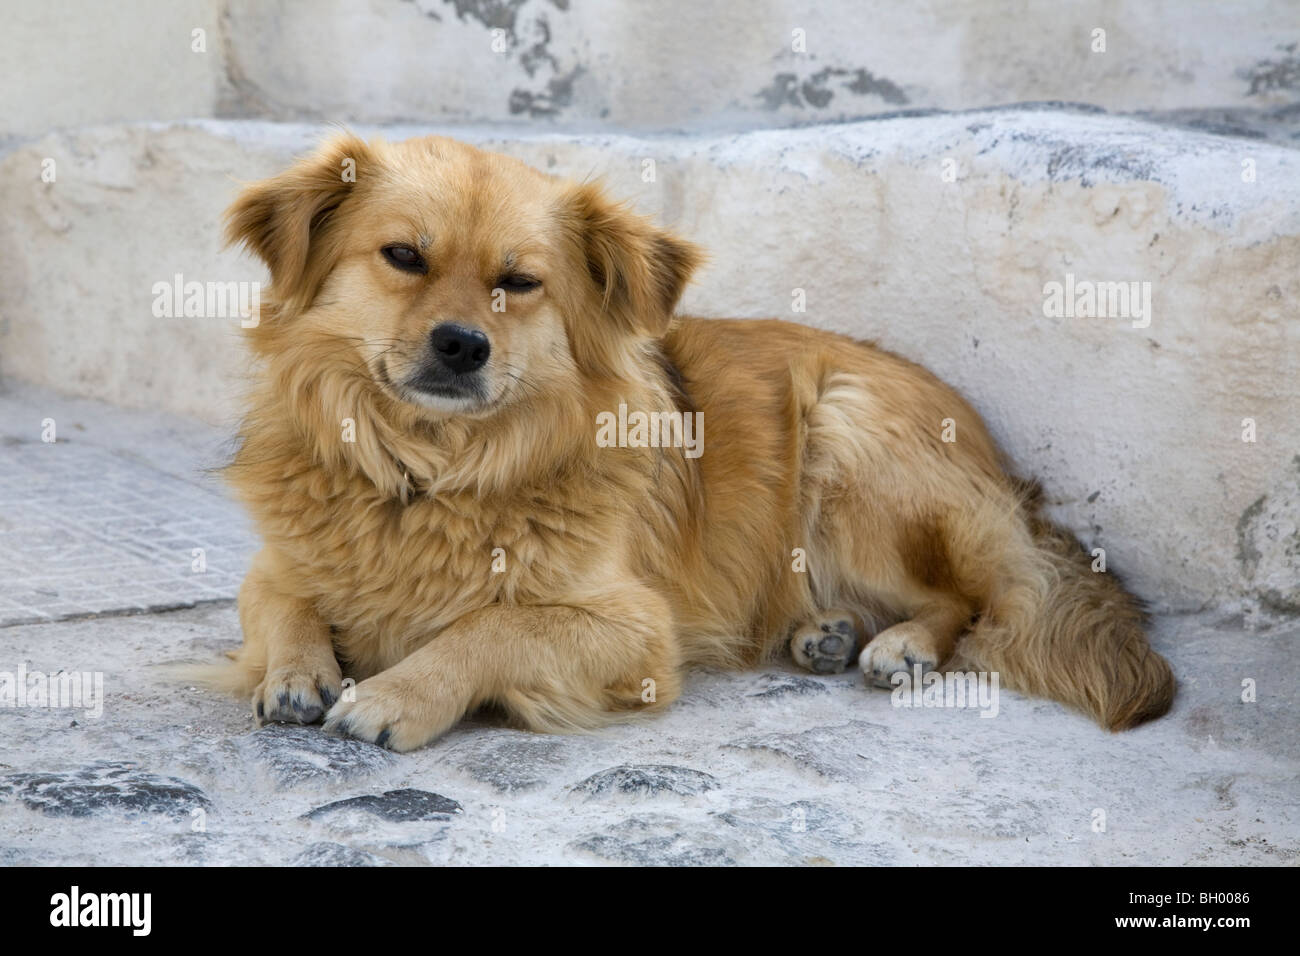 Small dog lying on cobblestone path Stock Photo